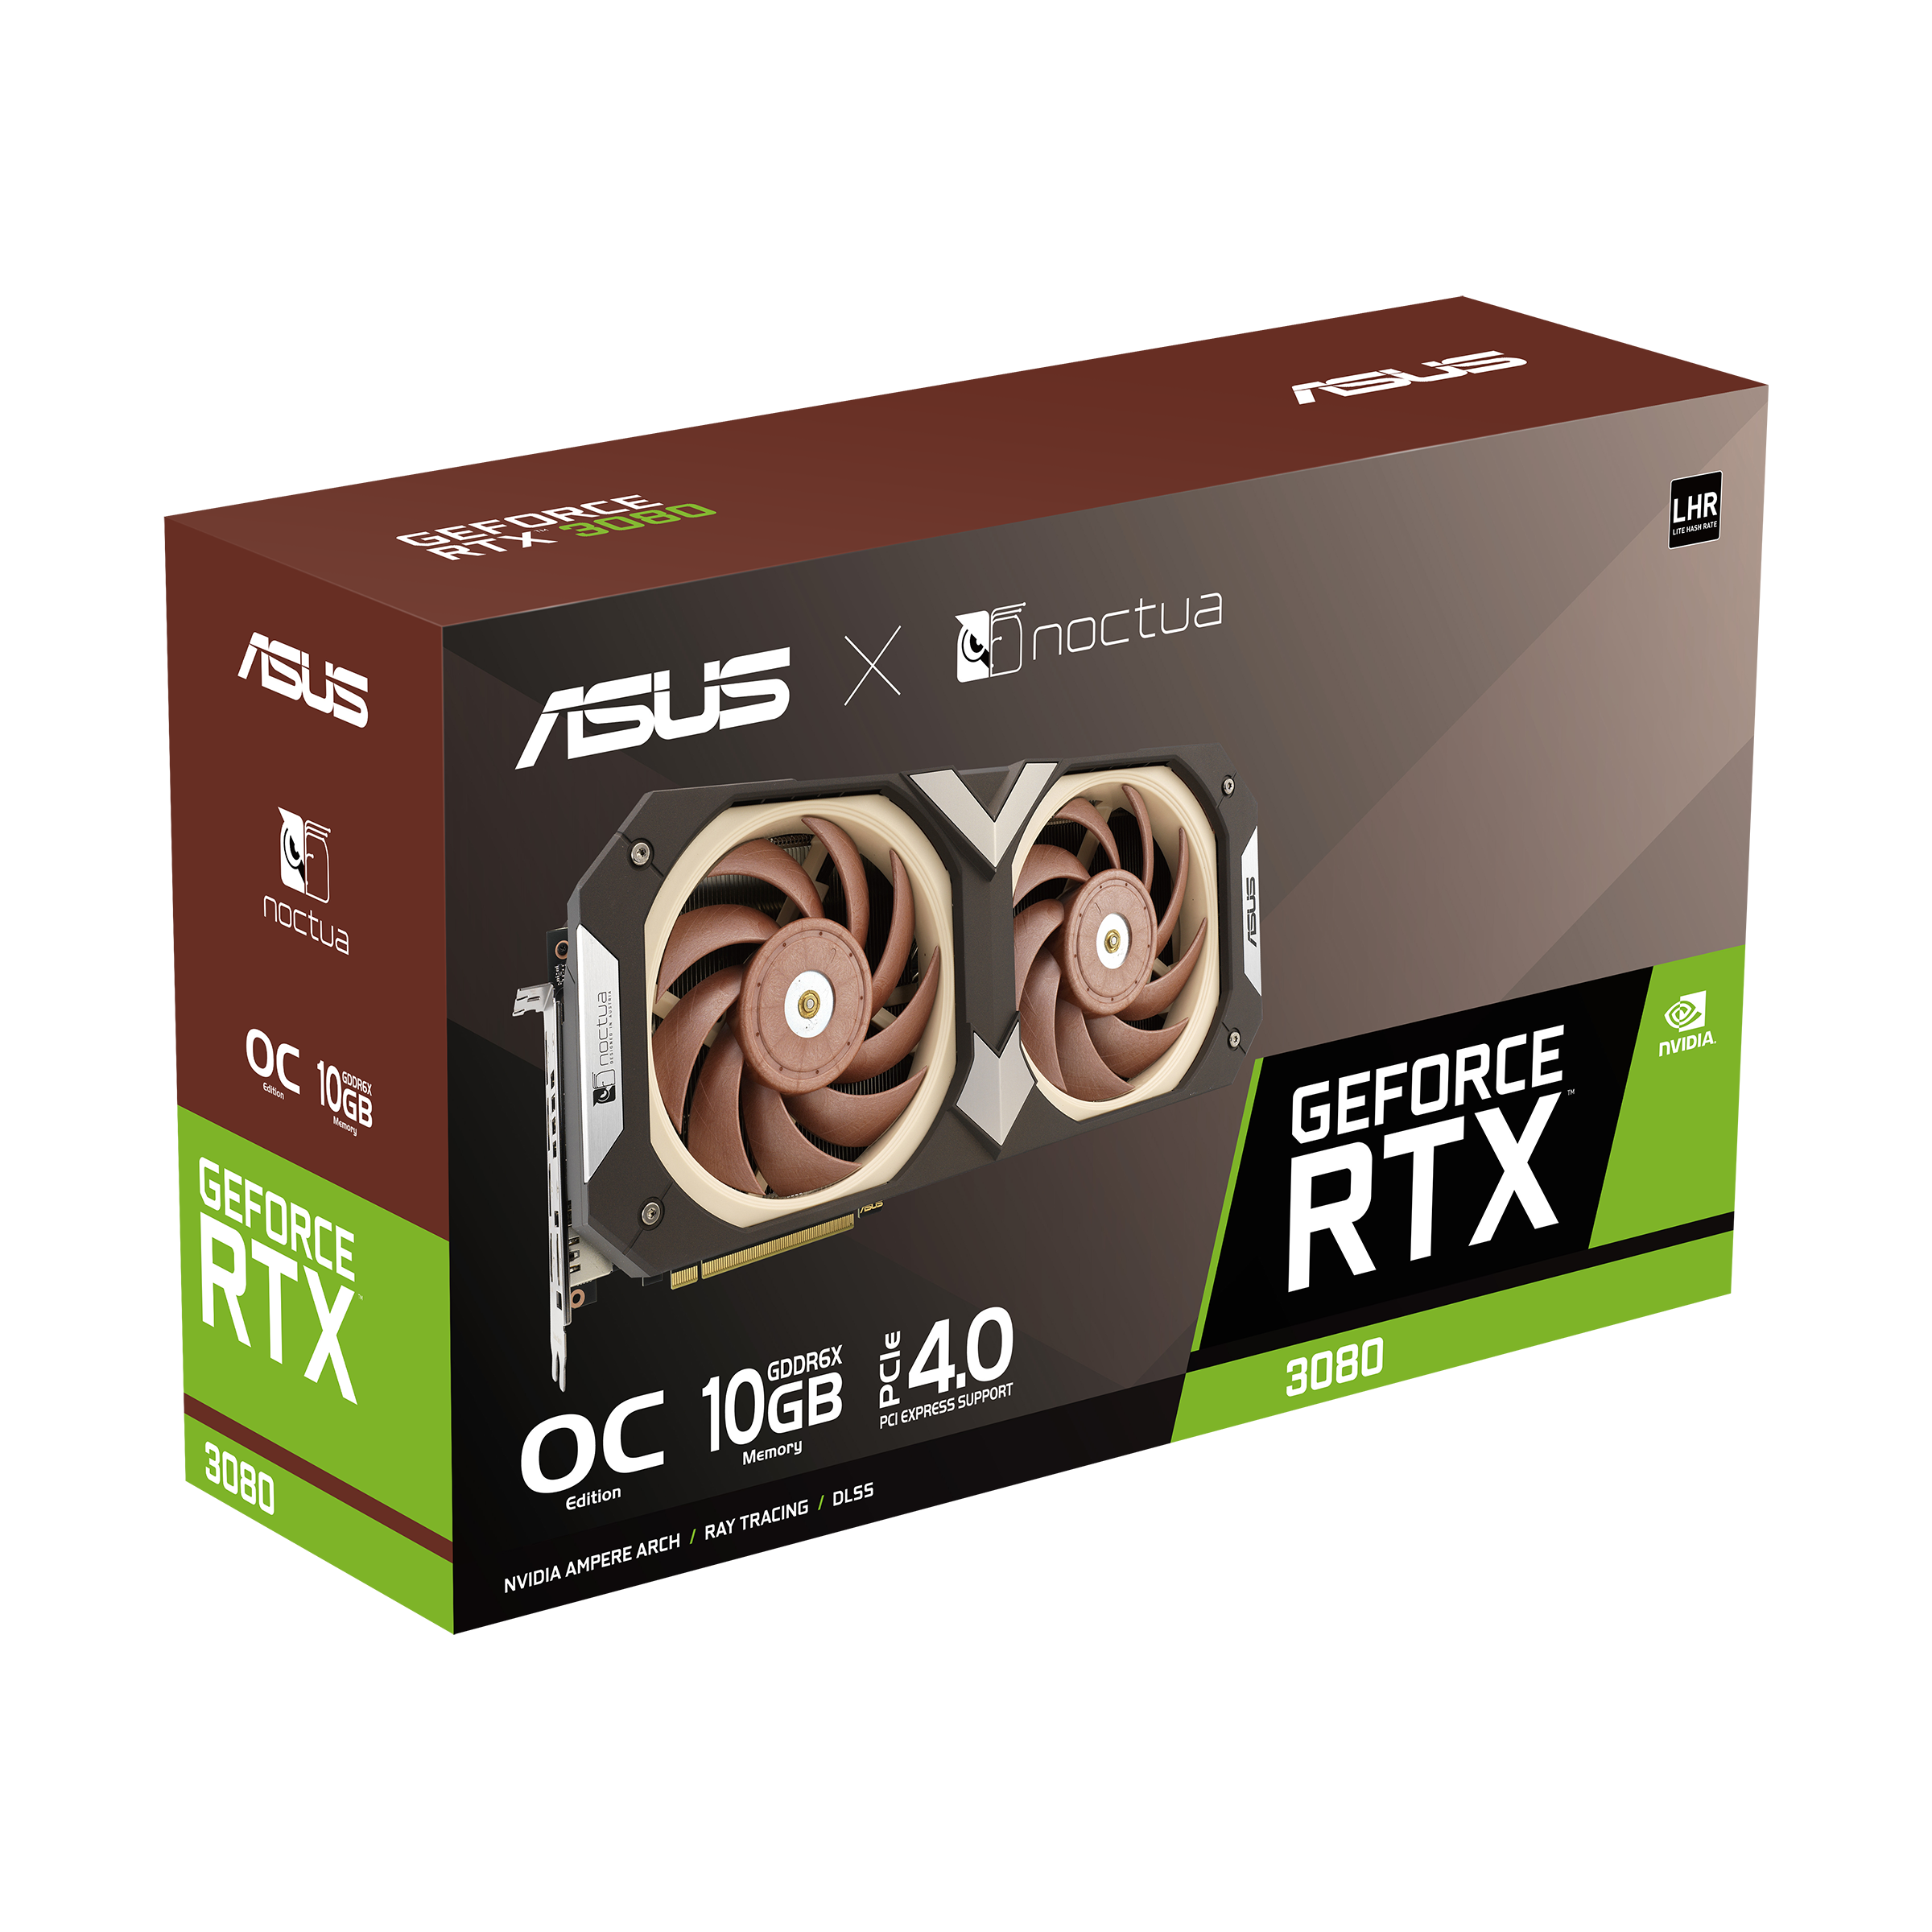 ASUS GeForce RTX 3080 Noctua OC Edition | Graphics Card